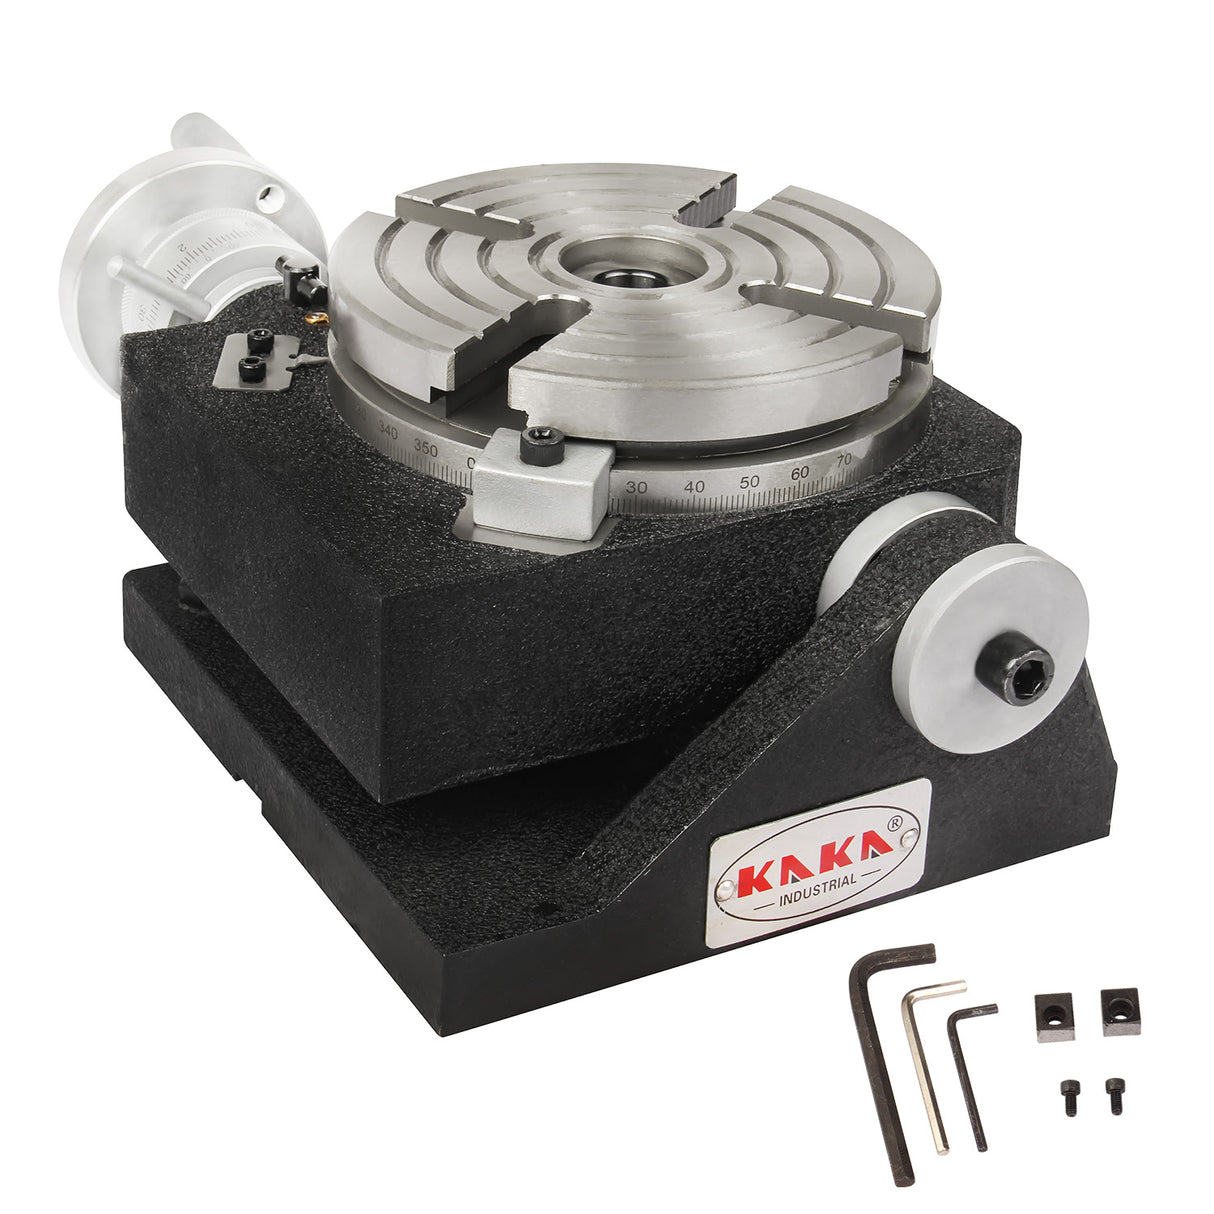 Kaka Industrial TSK series tilting rotary tables